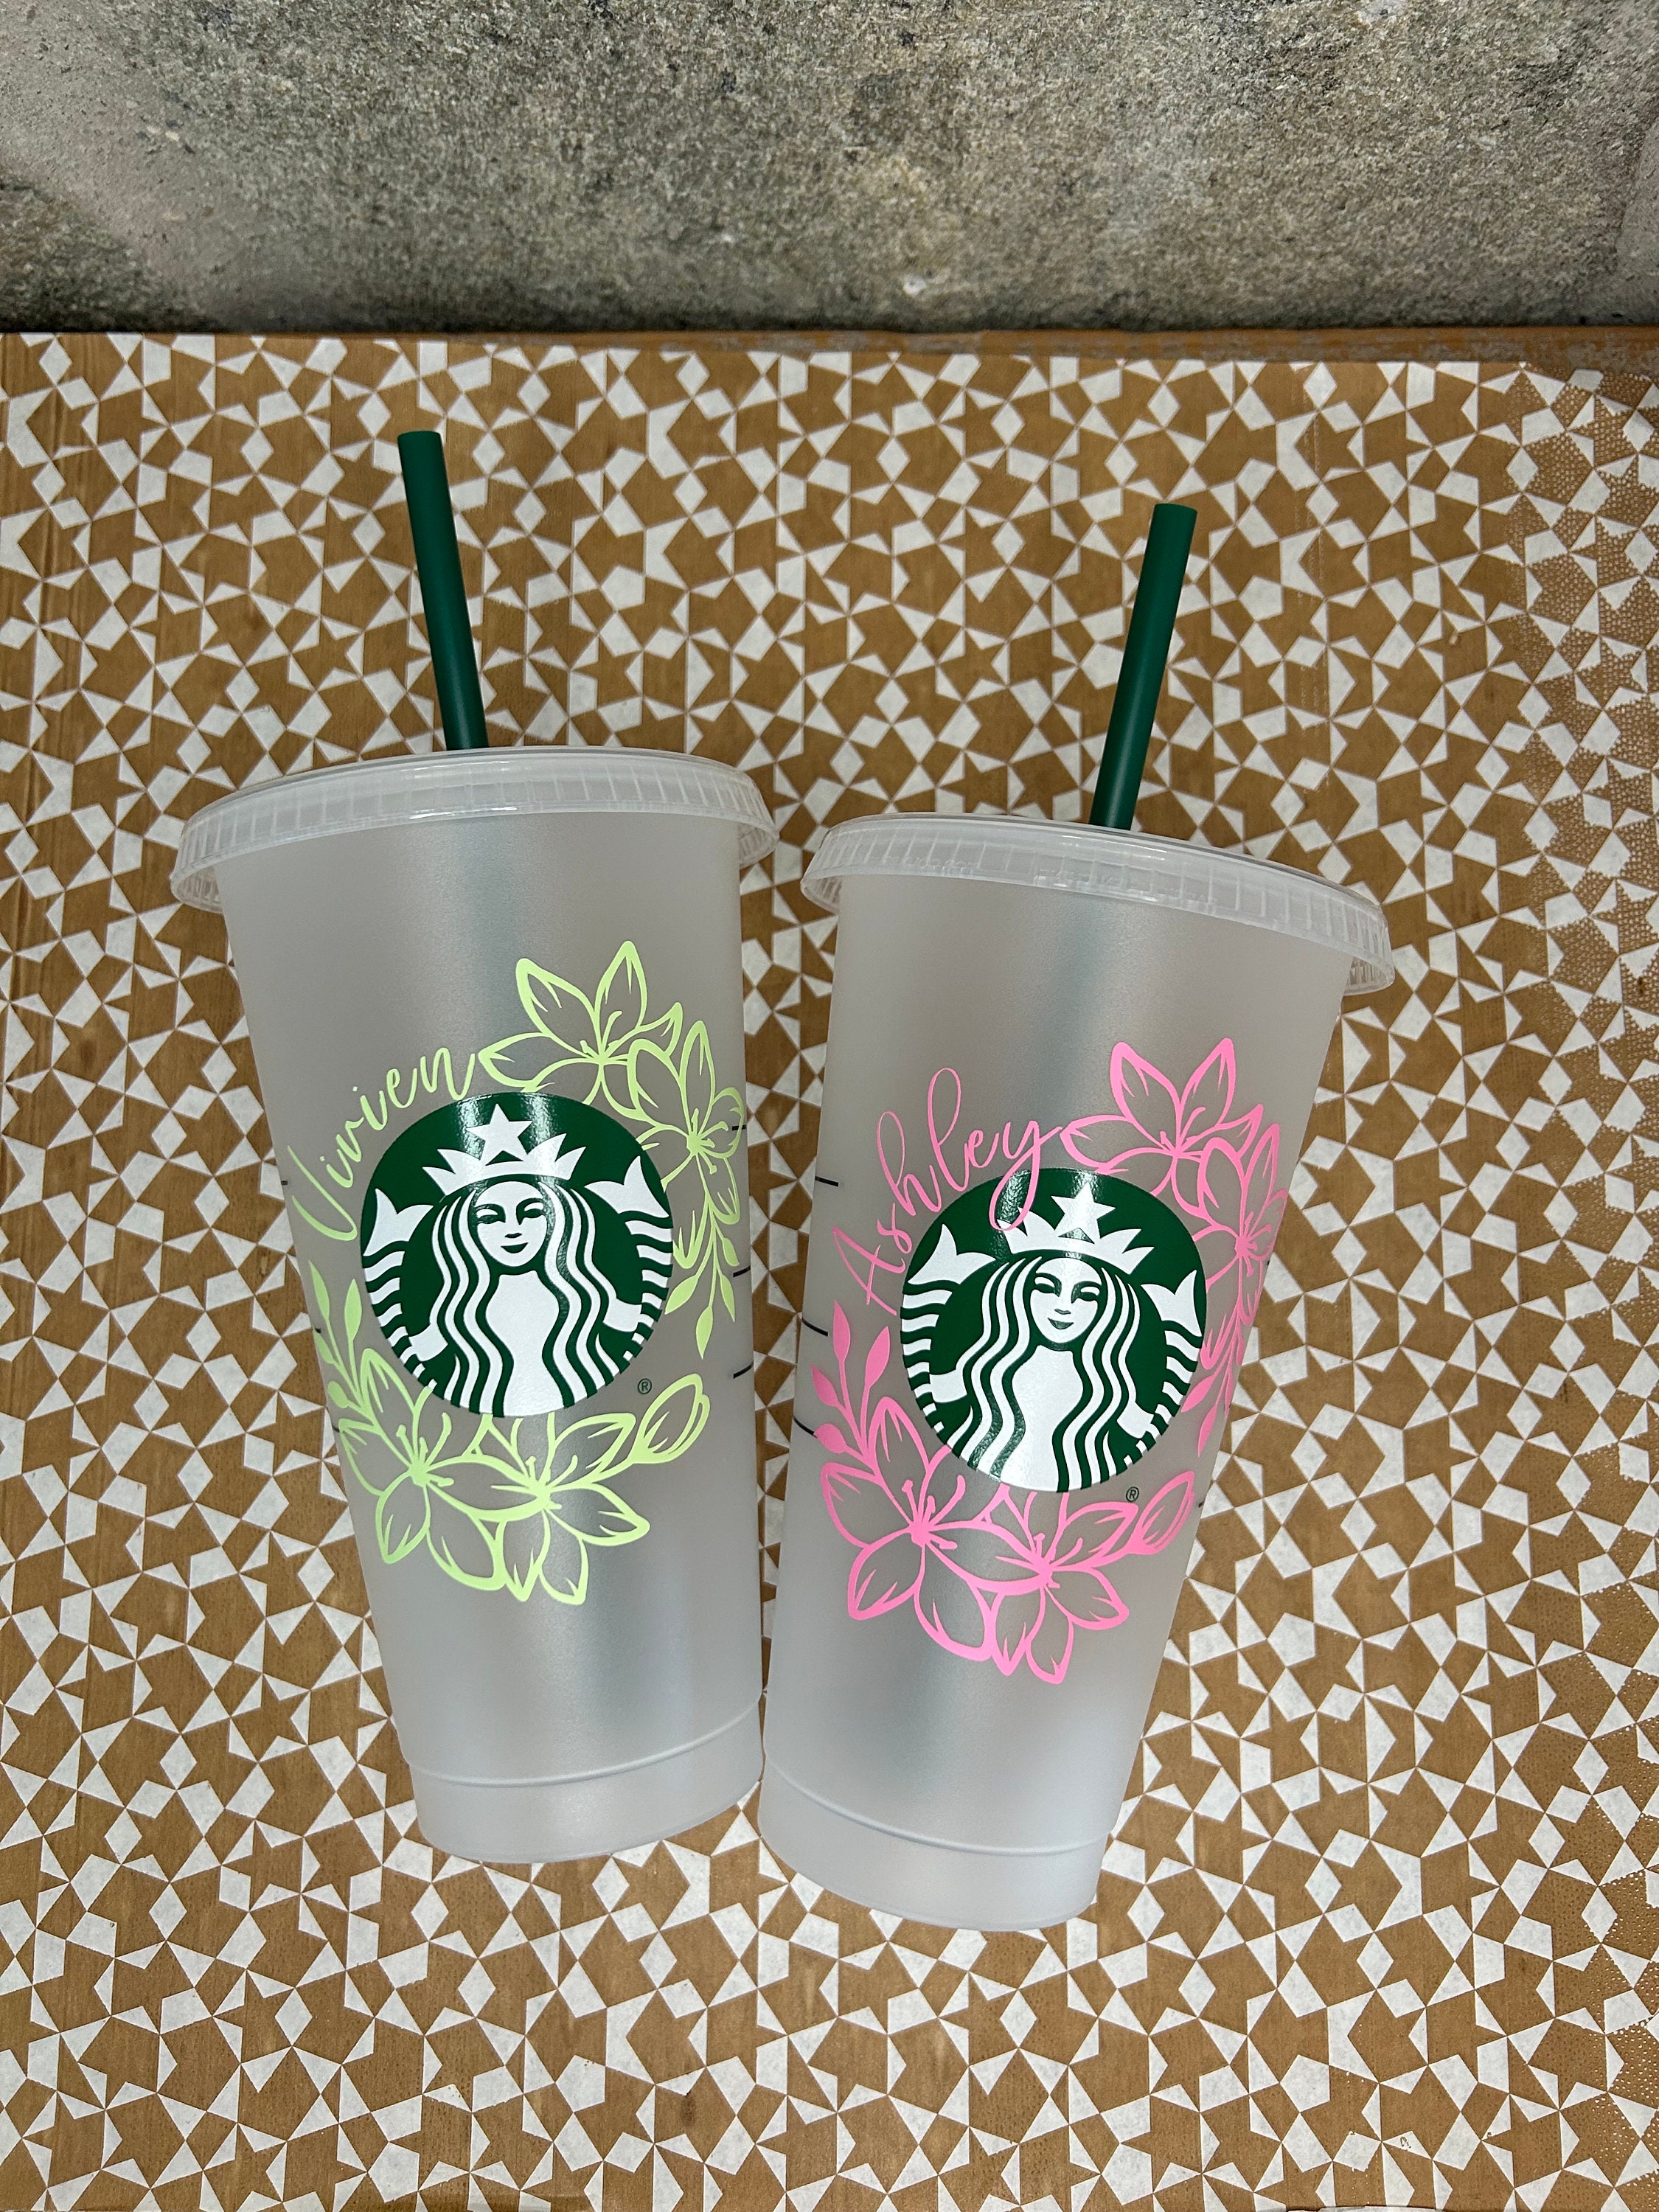 Louis Vuitton personalizes Starbucks cup #starbucks #starbuckscoffee #lv # louisvuitton #homedecor #…